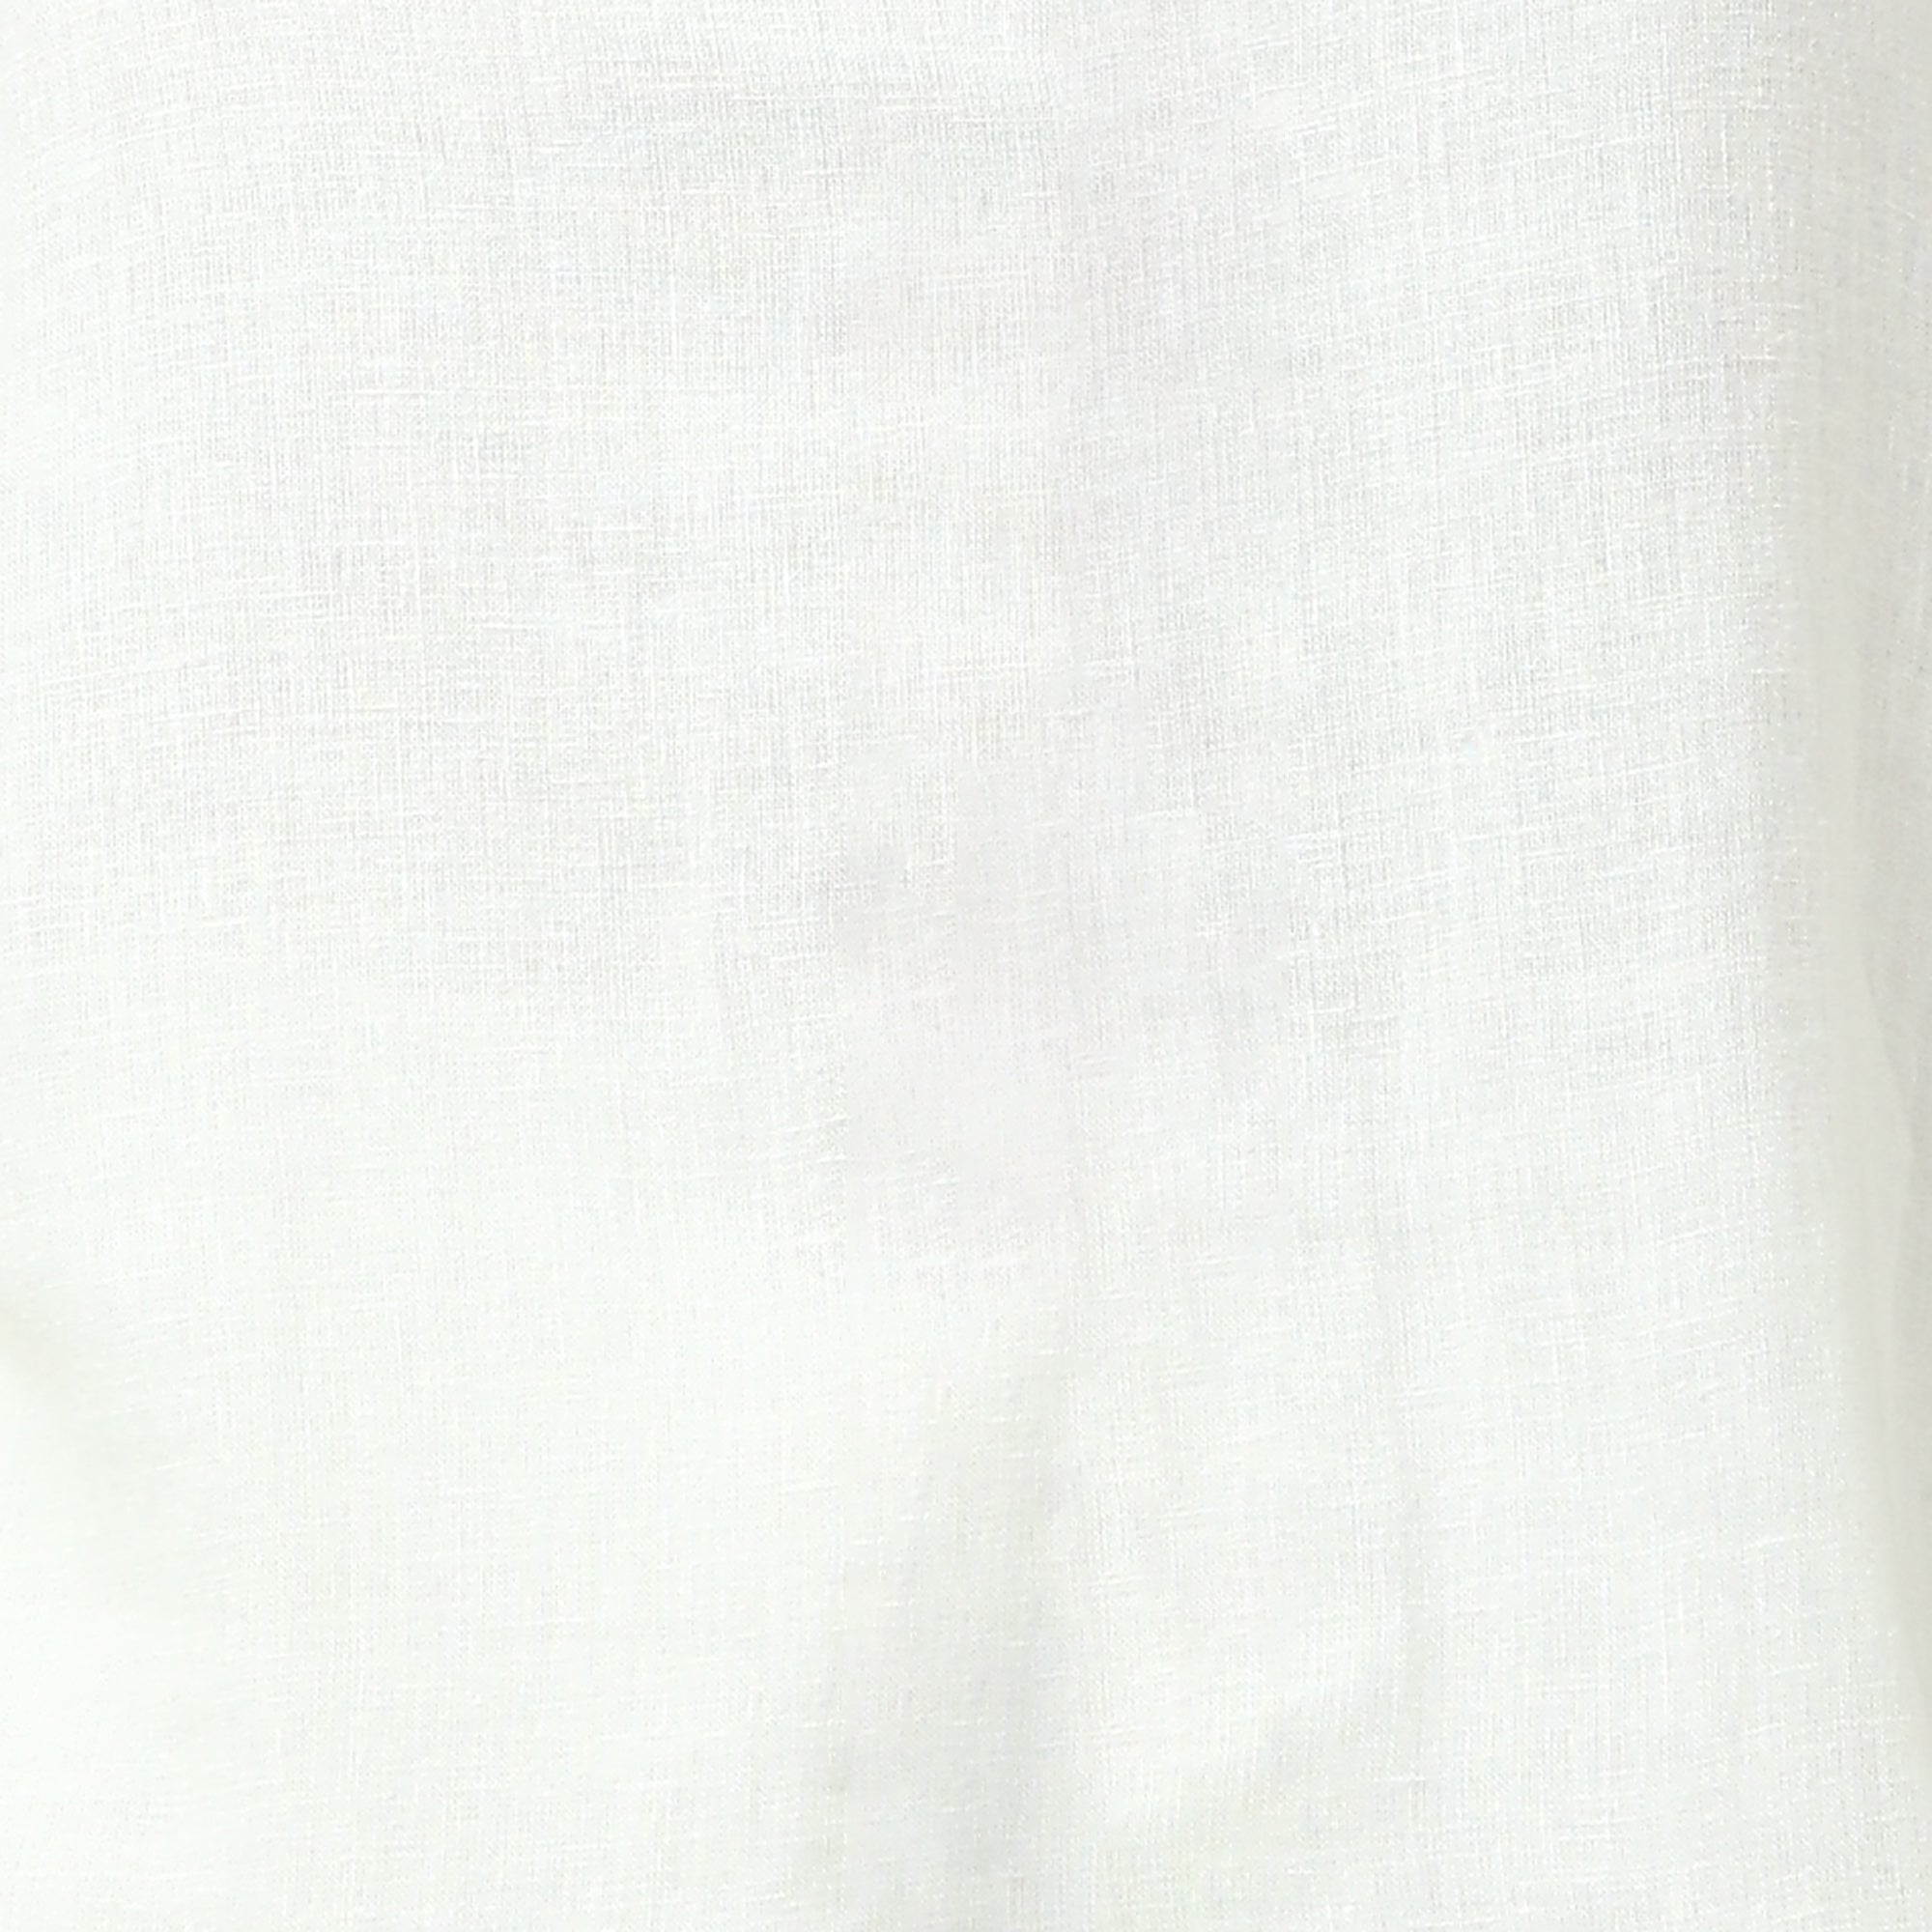 Shoji Set of 2 - Gather Neck Top & Pants - Textured White & Coffee Brown